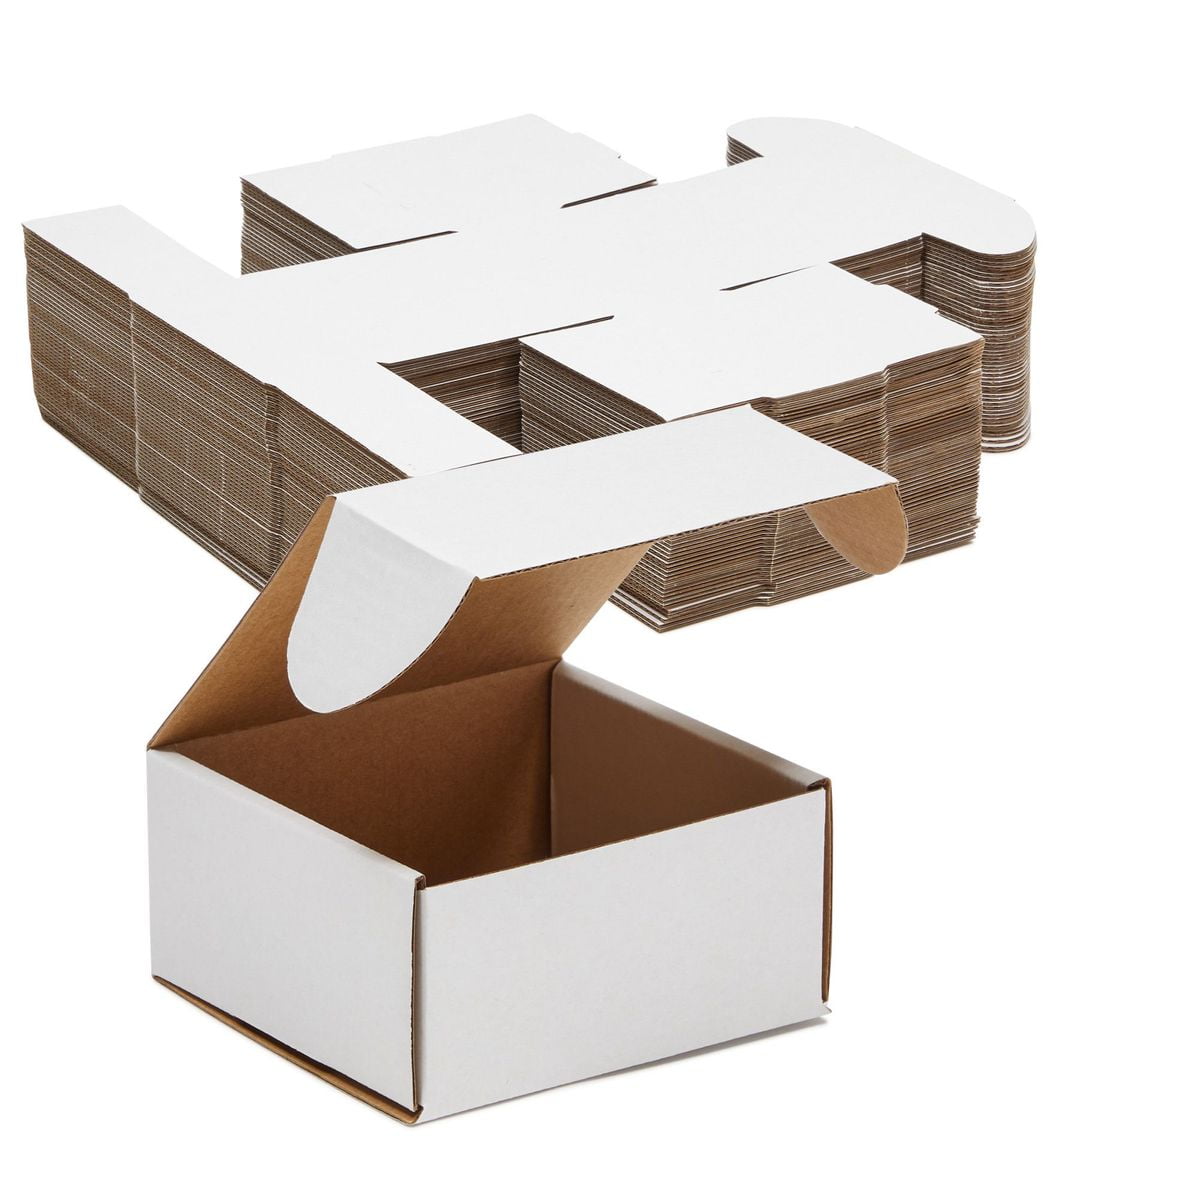 50-4.375 x 4.375 x 2 1/2 Small White Cardboard Carton Mailer Shipping Box Boxes 